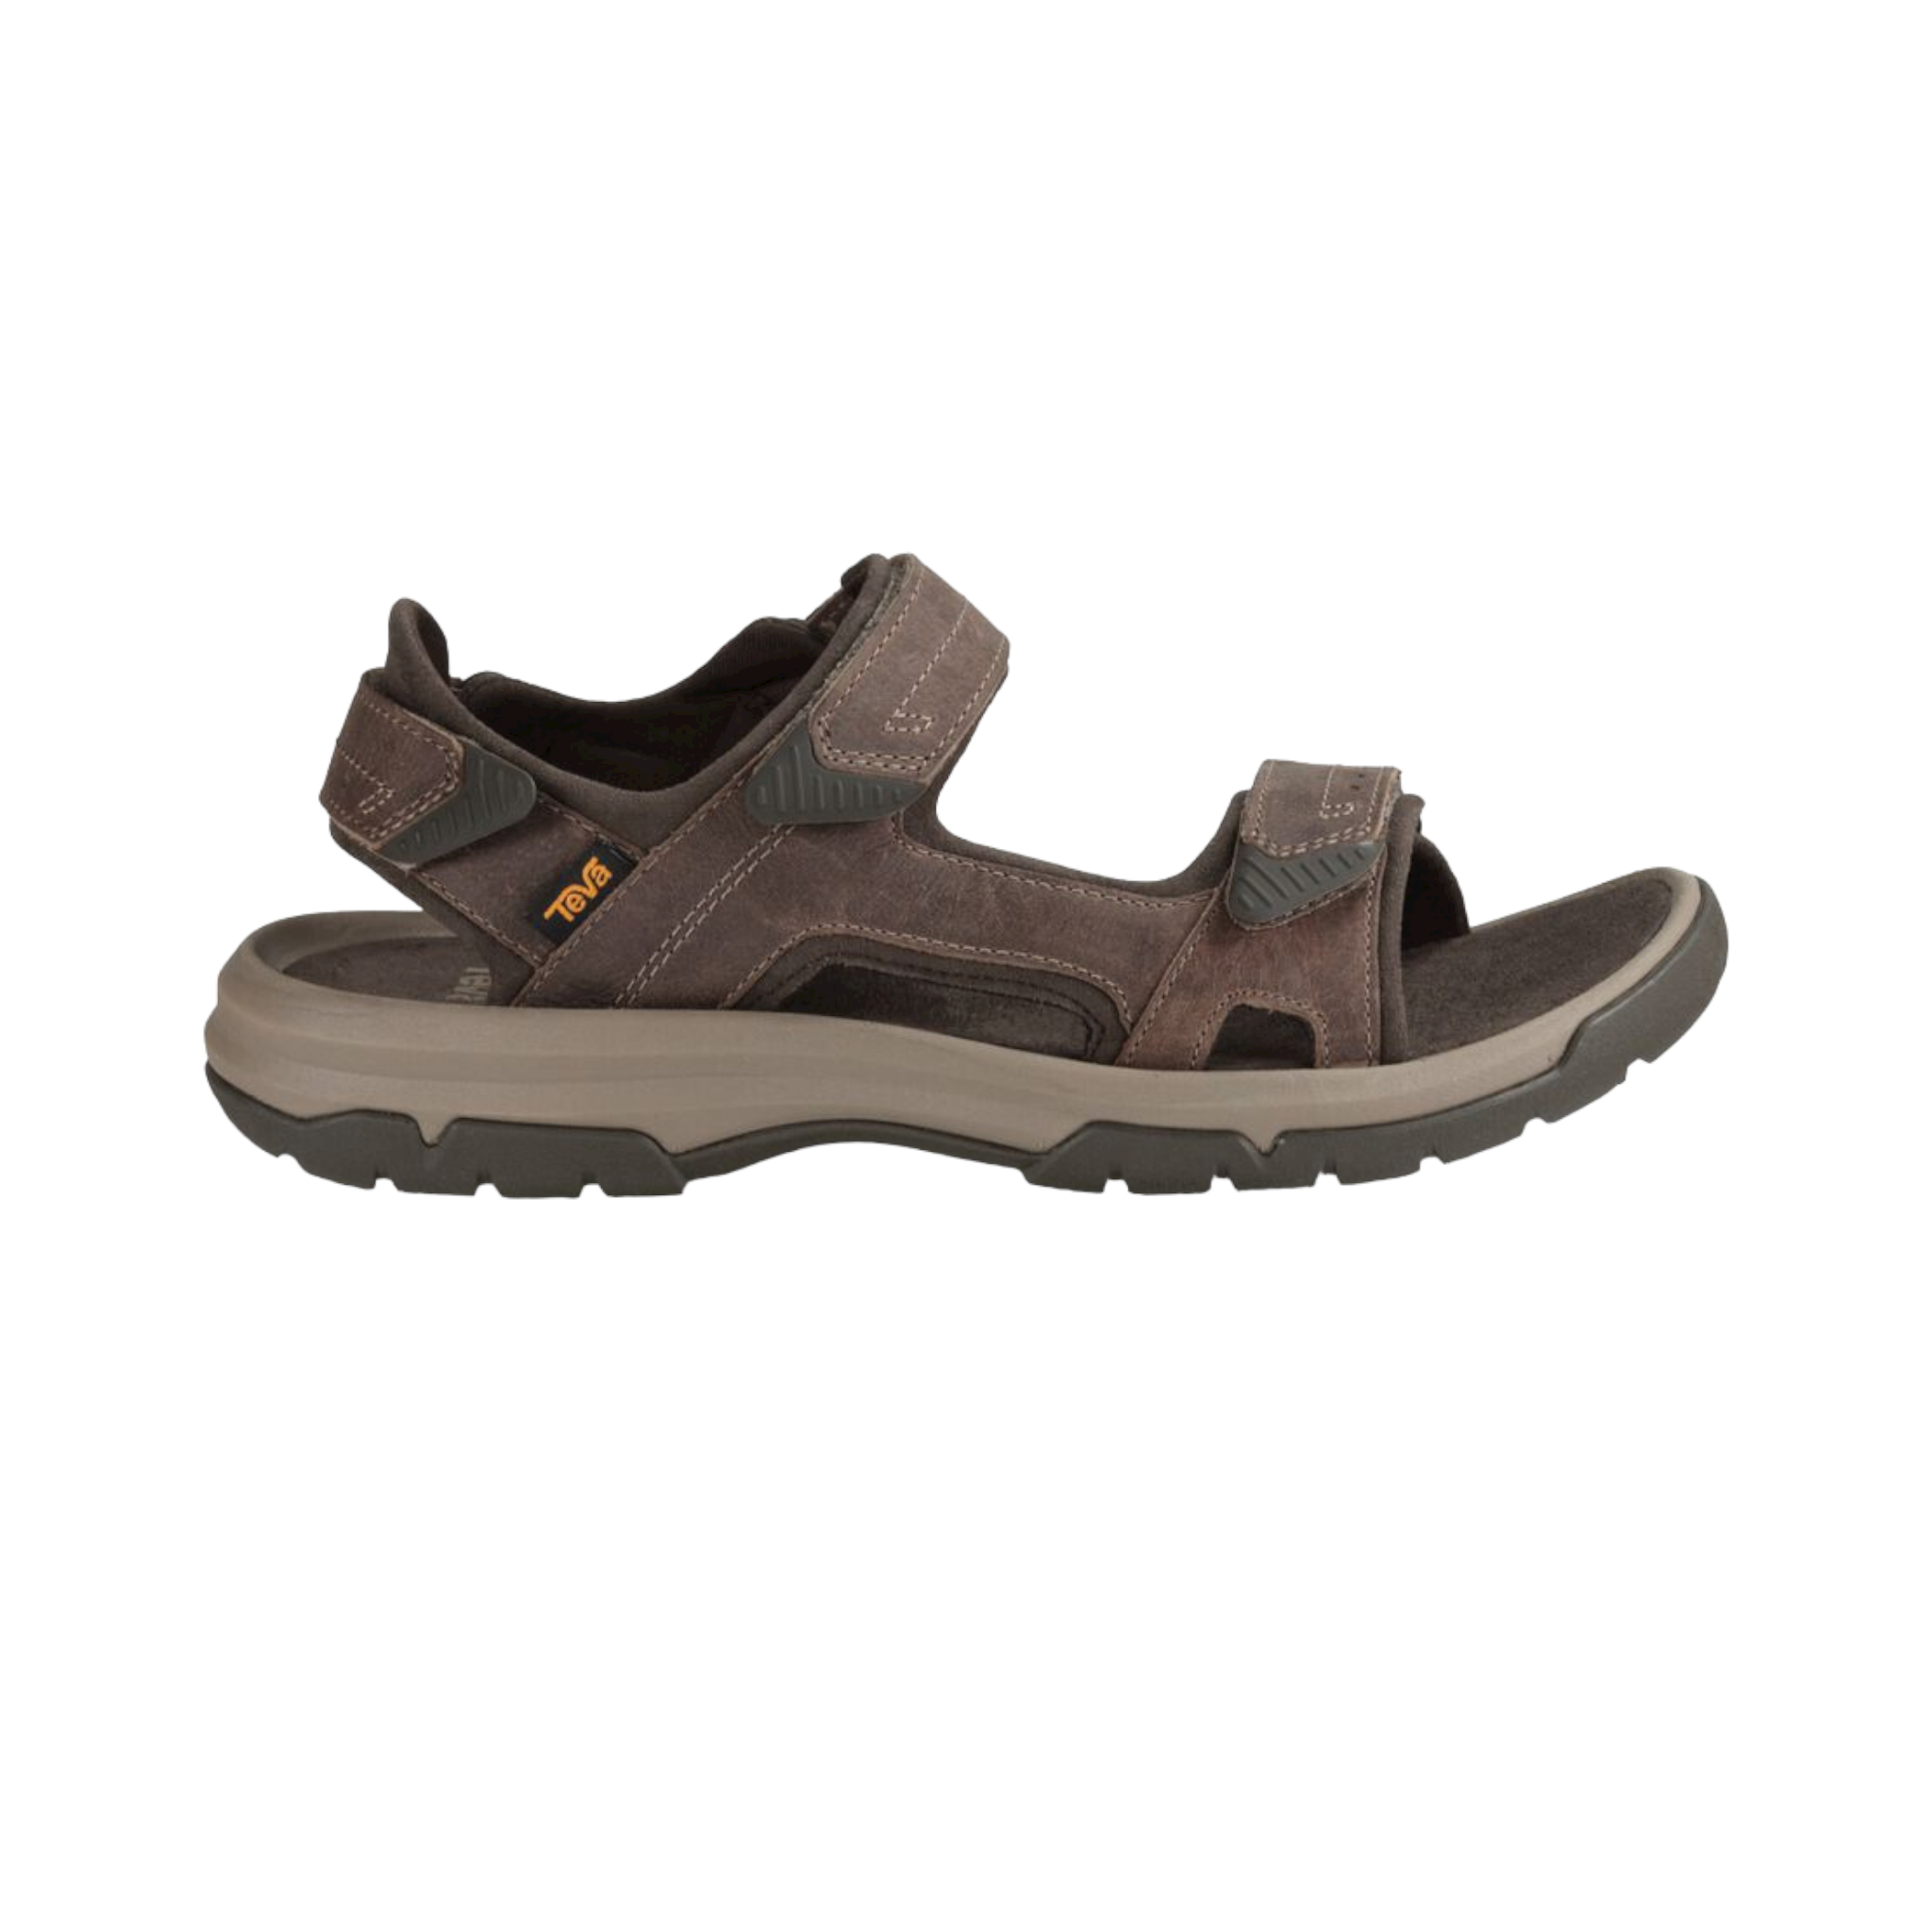 M Langdon - shoe&amp;me - Teva - Sandal - Eco Collection, Mens, Sandal, Summer 22